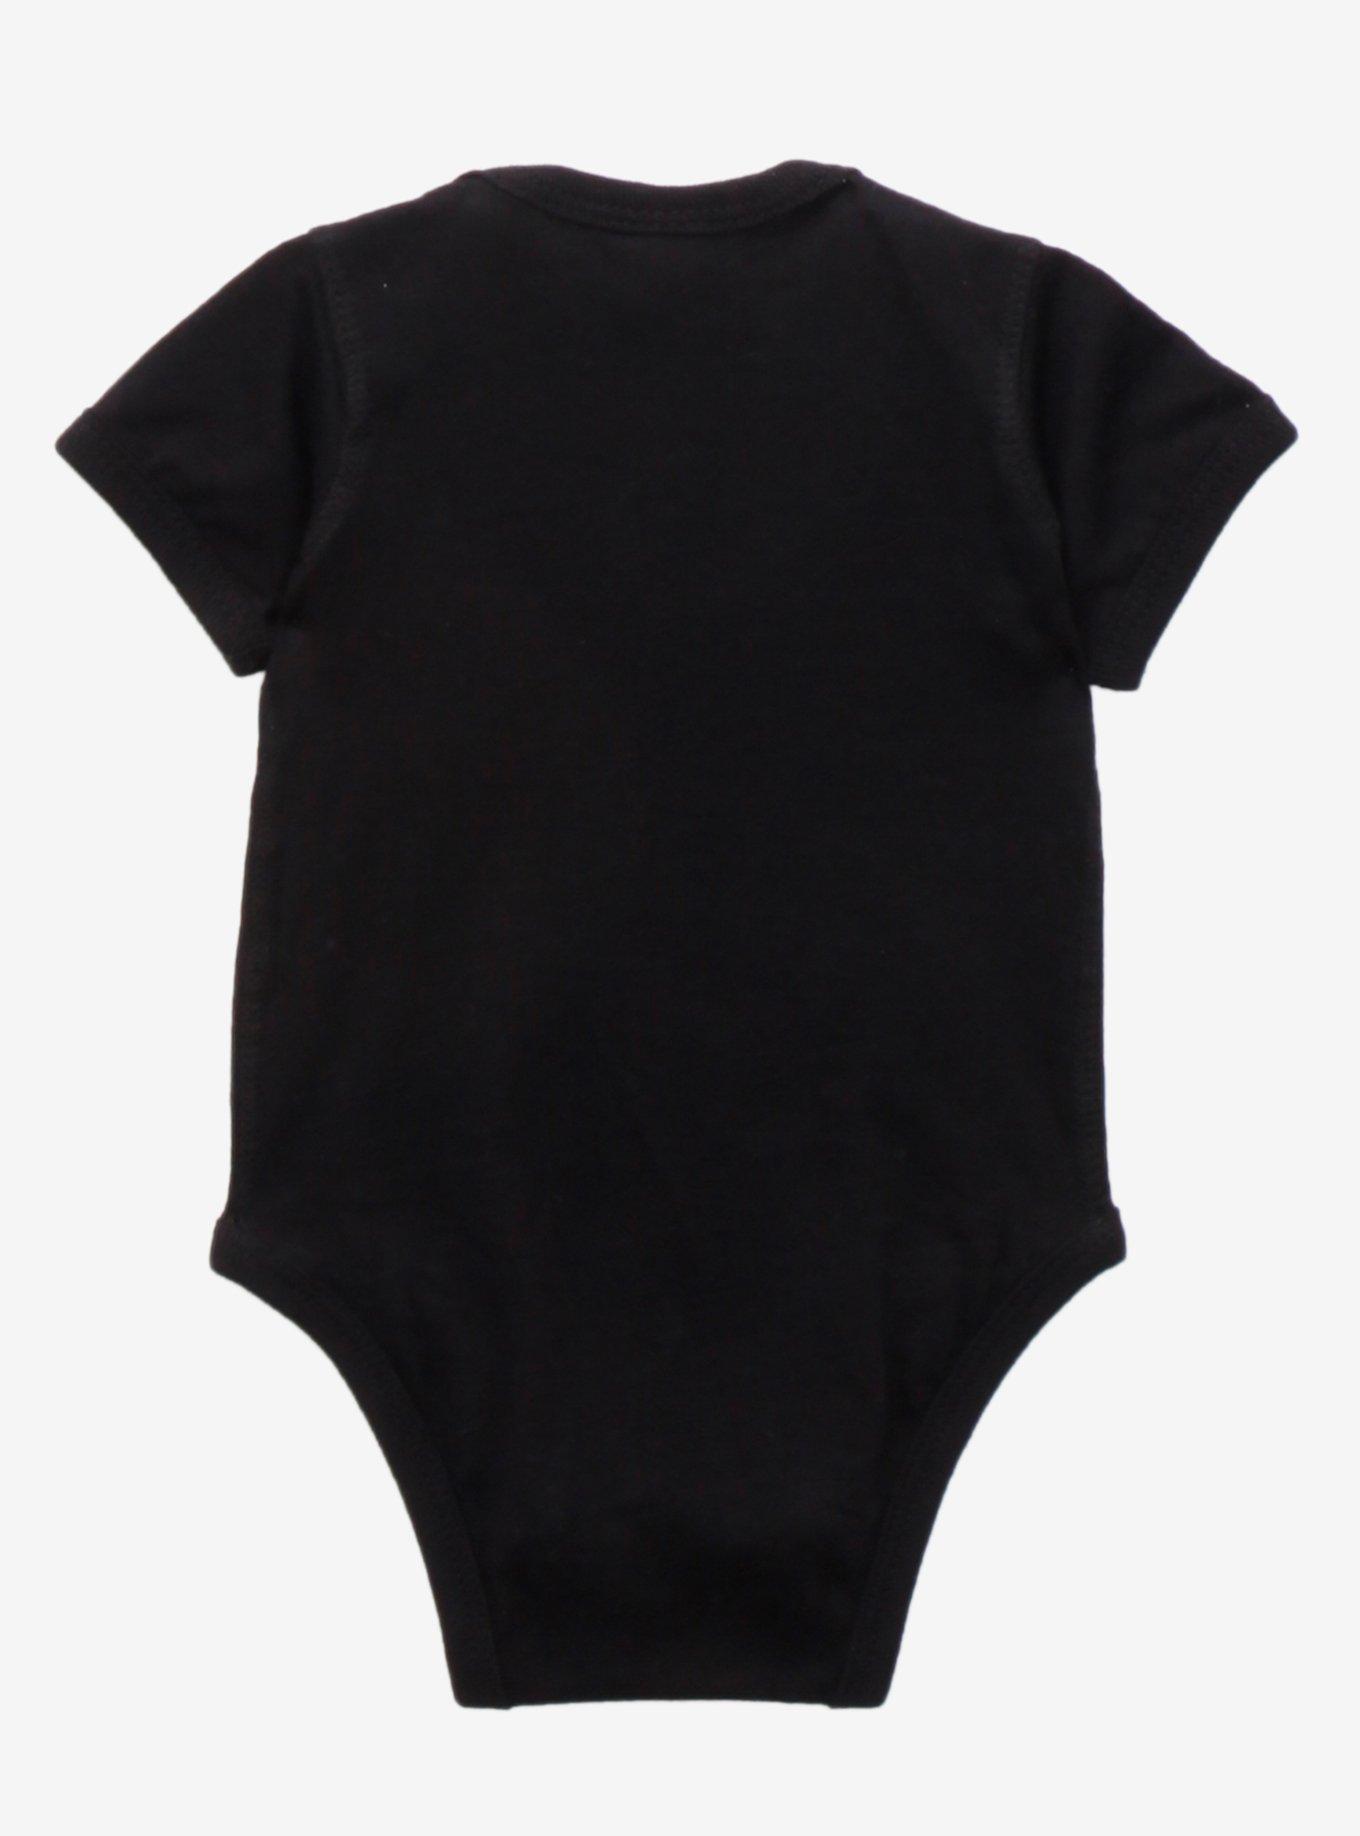 Gorillaz Humanz Group Infant Bodysuit, BLACK, alternate